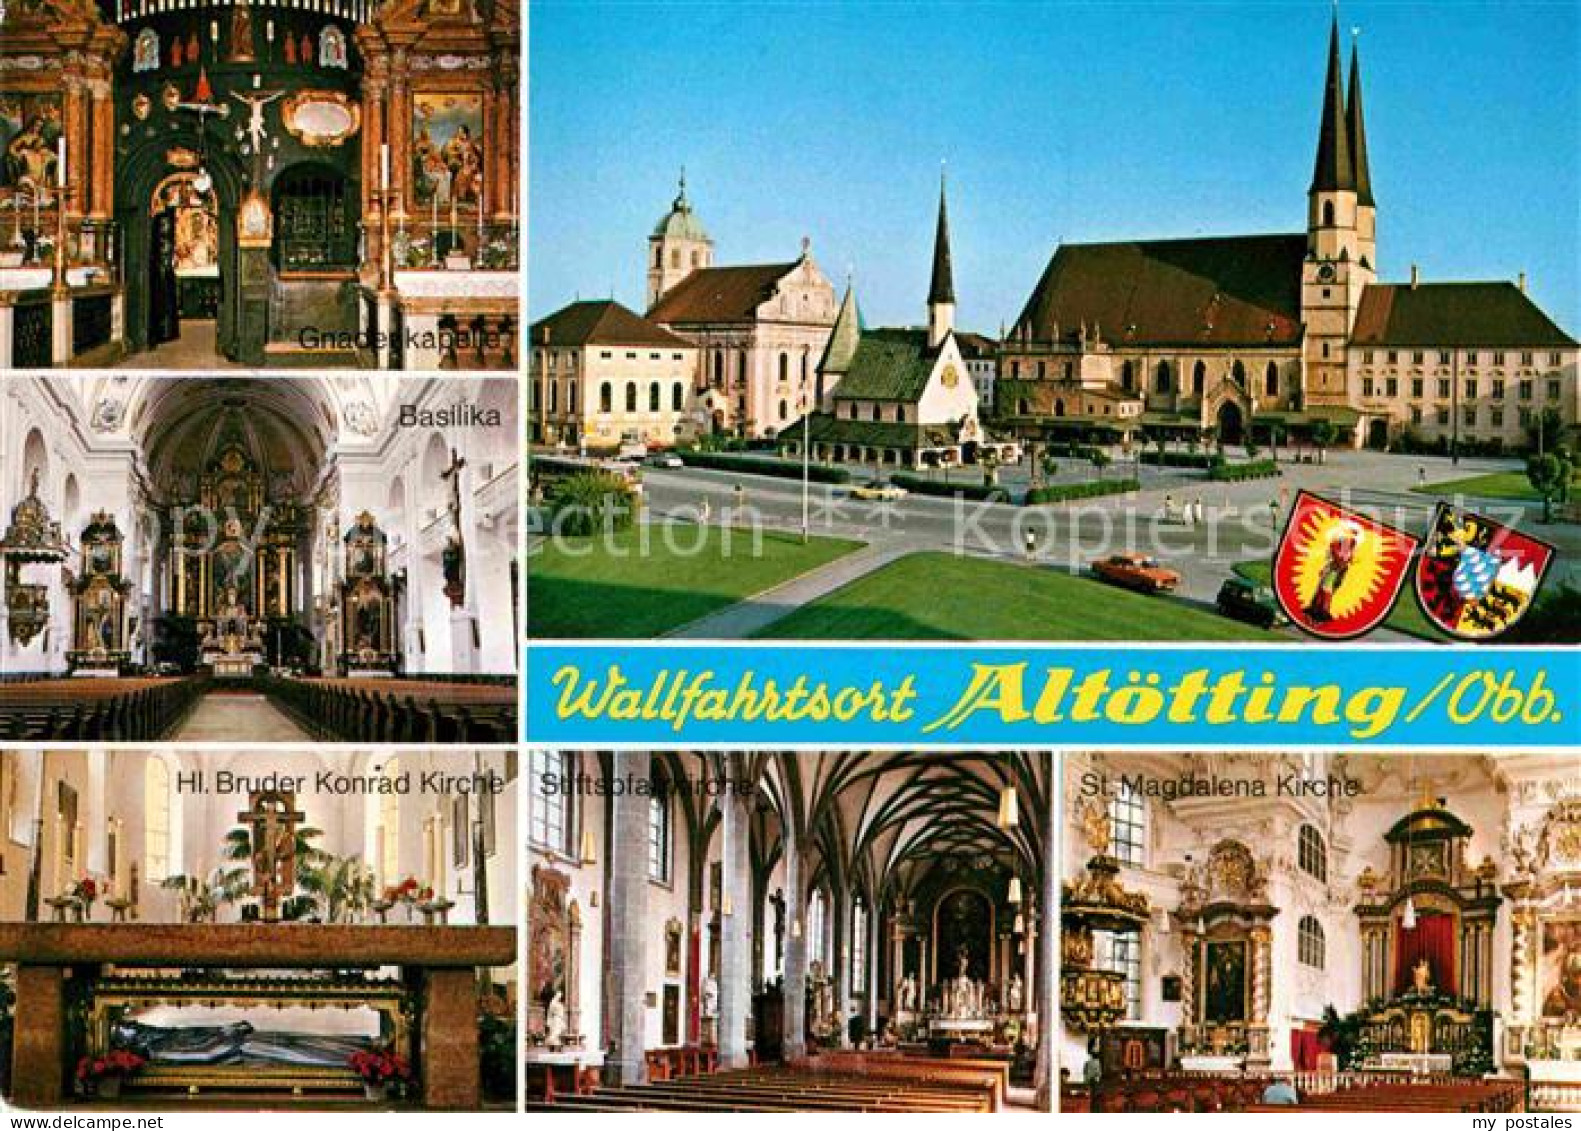 72692299 Altoetting Gnadenkapelle Basilika Hl Bruder Konrad Kirche Stiftspfarrki - Altoetting